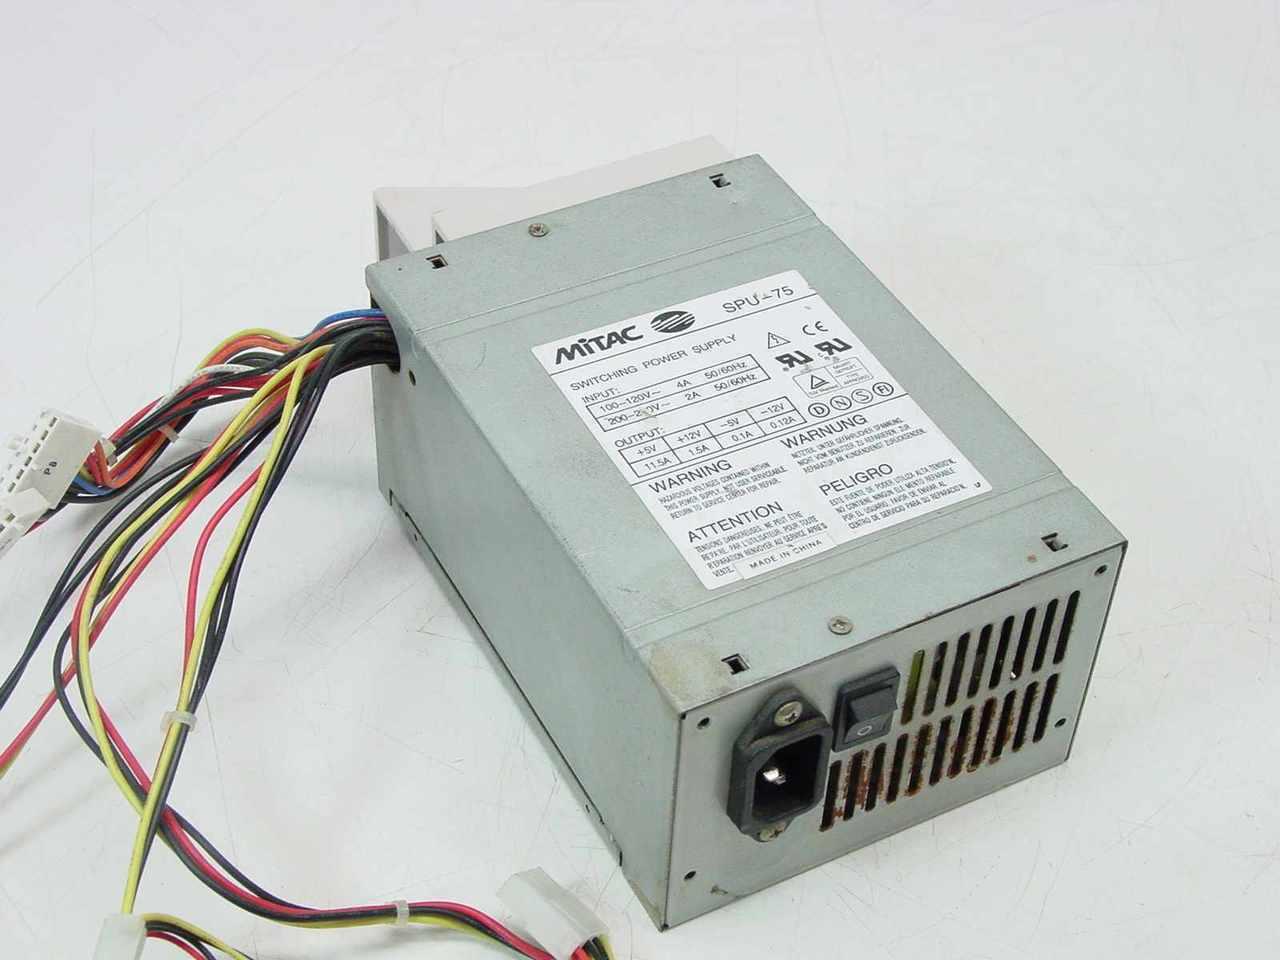 SPU 75 C304231 0013 304231 001 power supply 75 watt no longer supplied